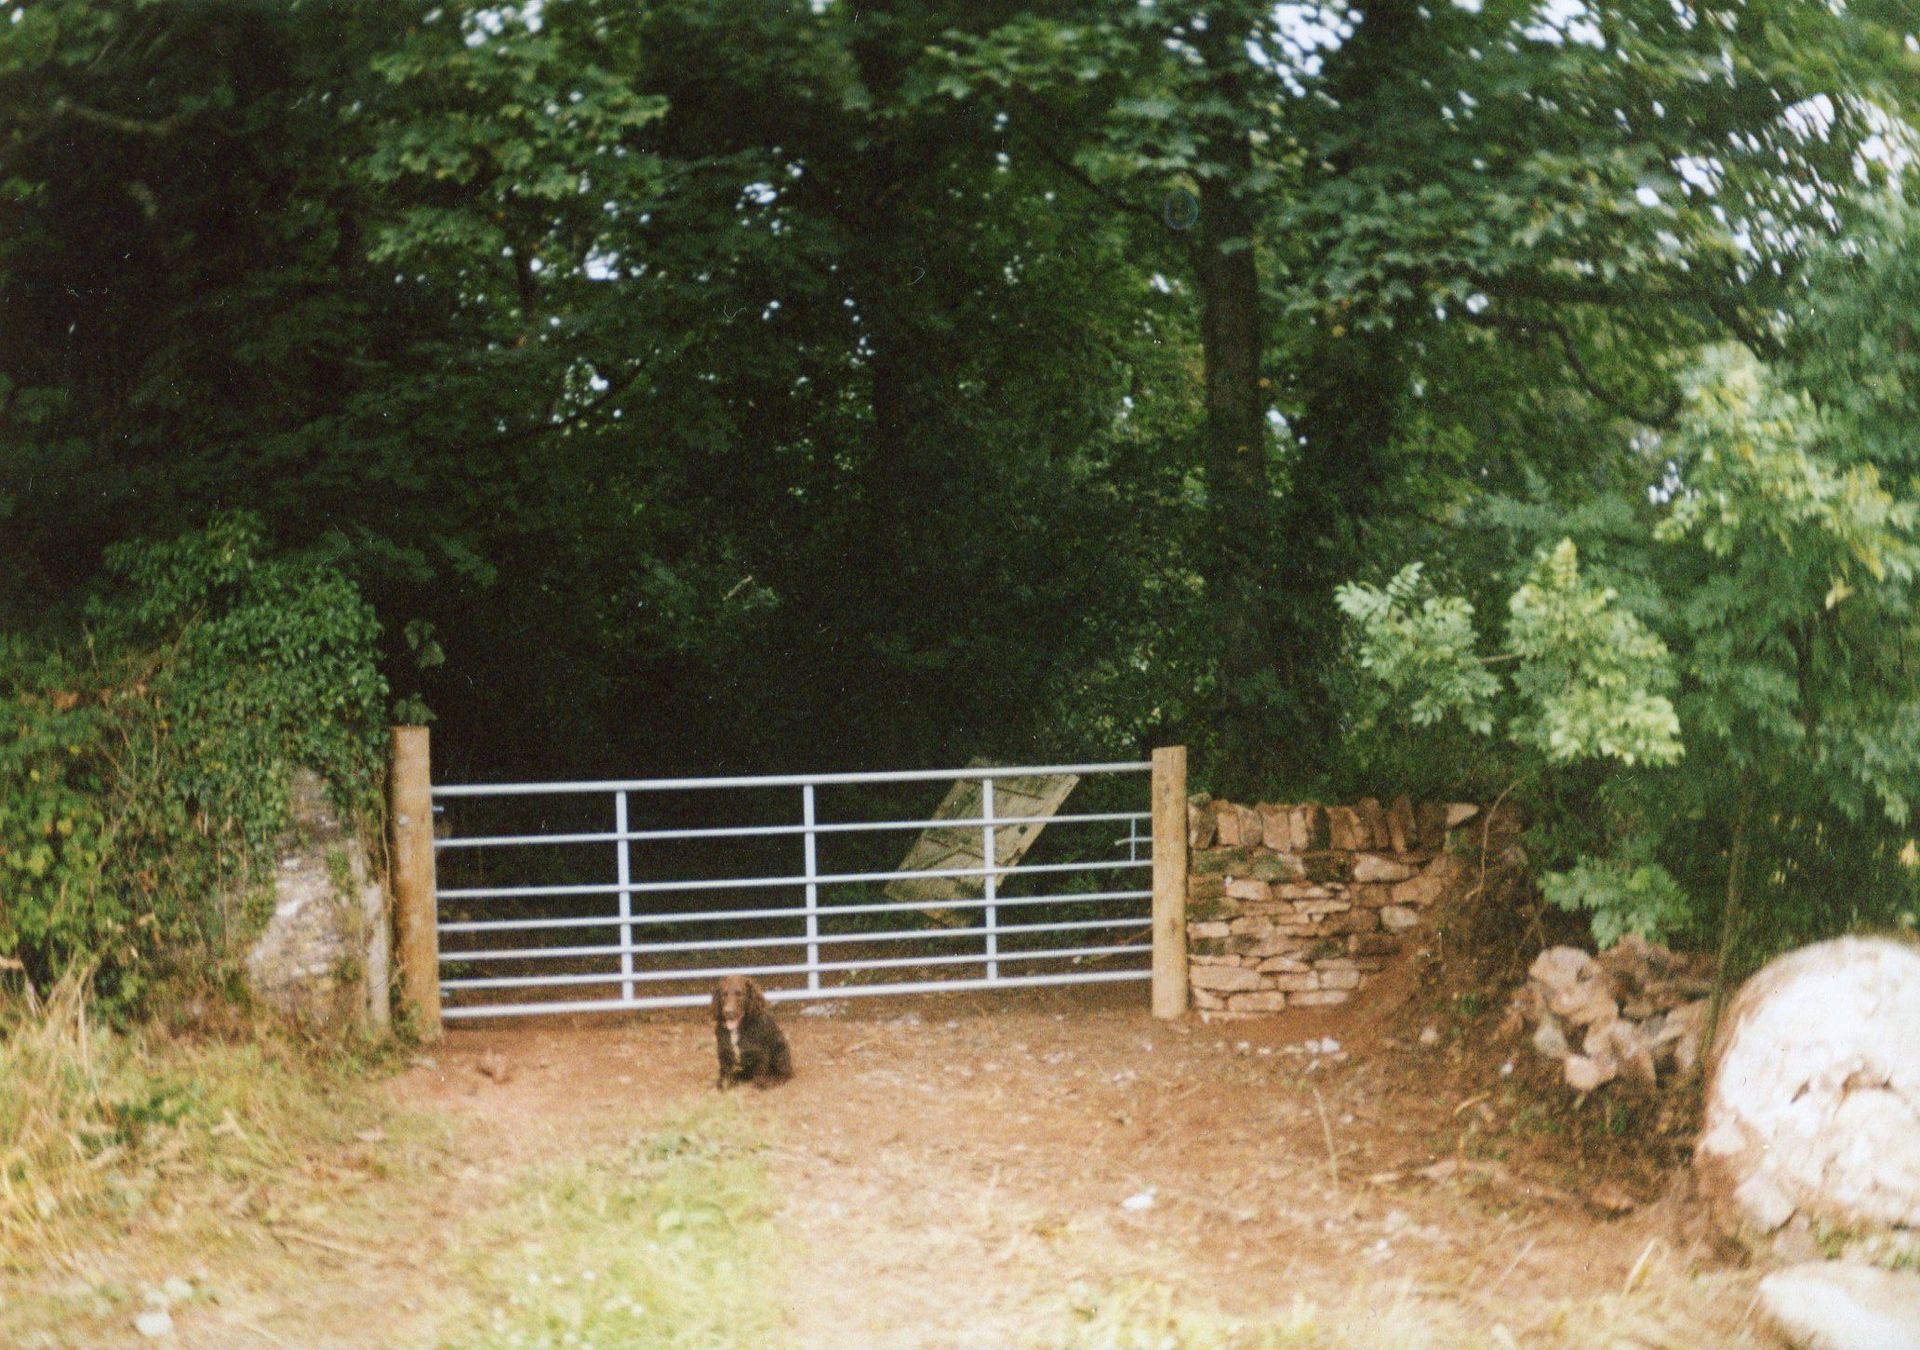 installed gate